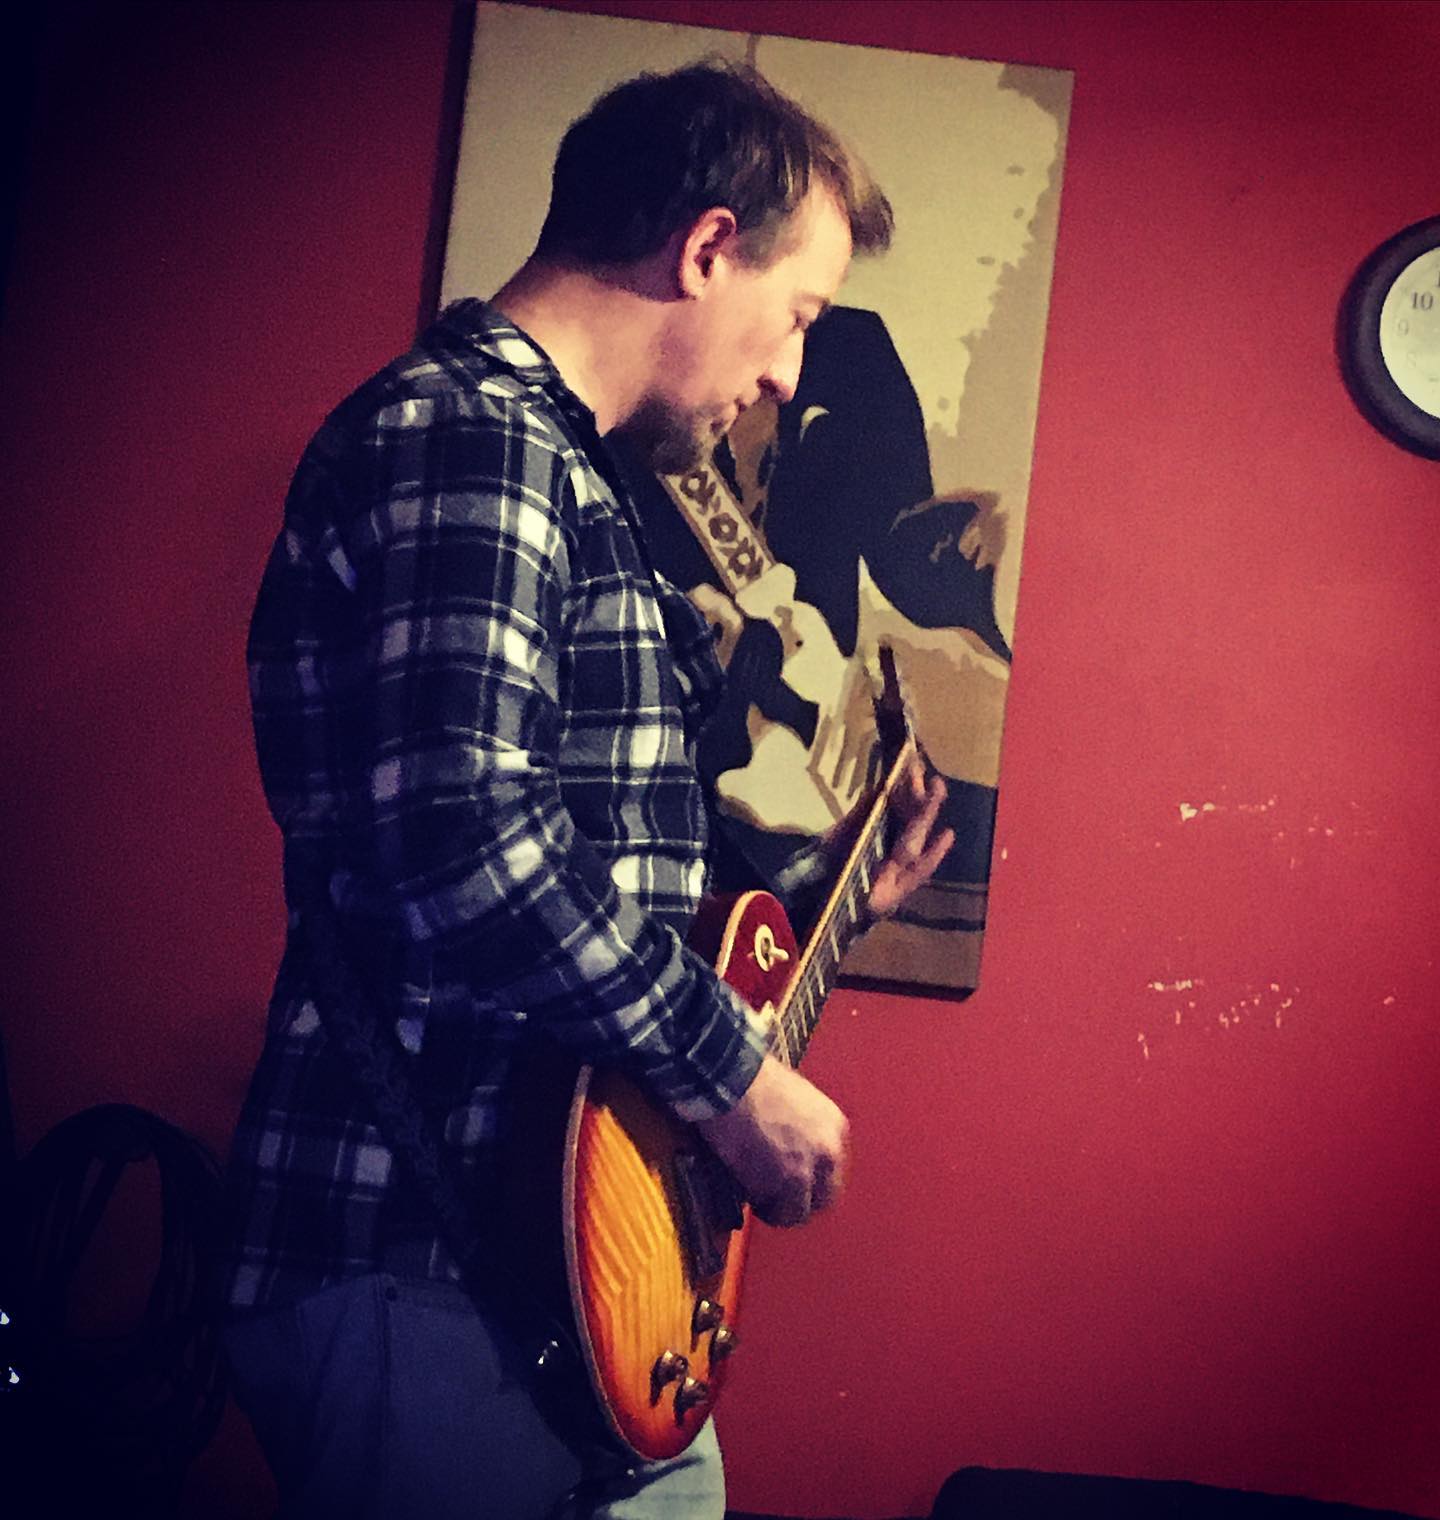 Moe recording guitar tracks in the studio